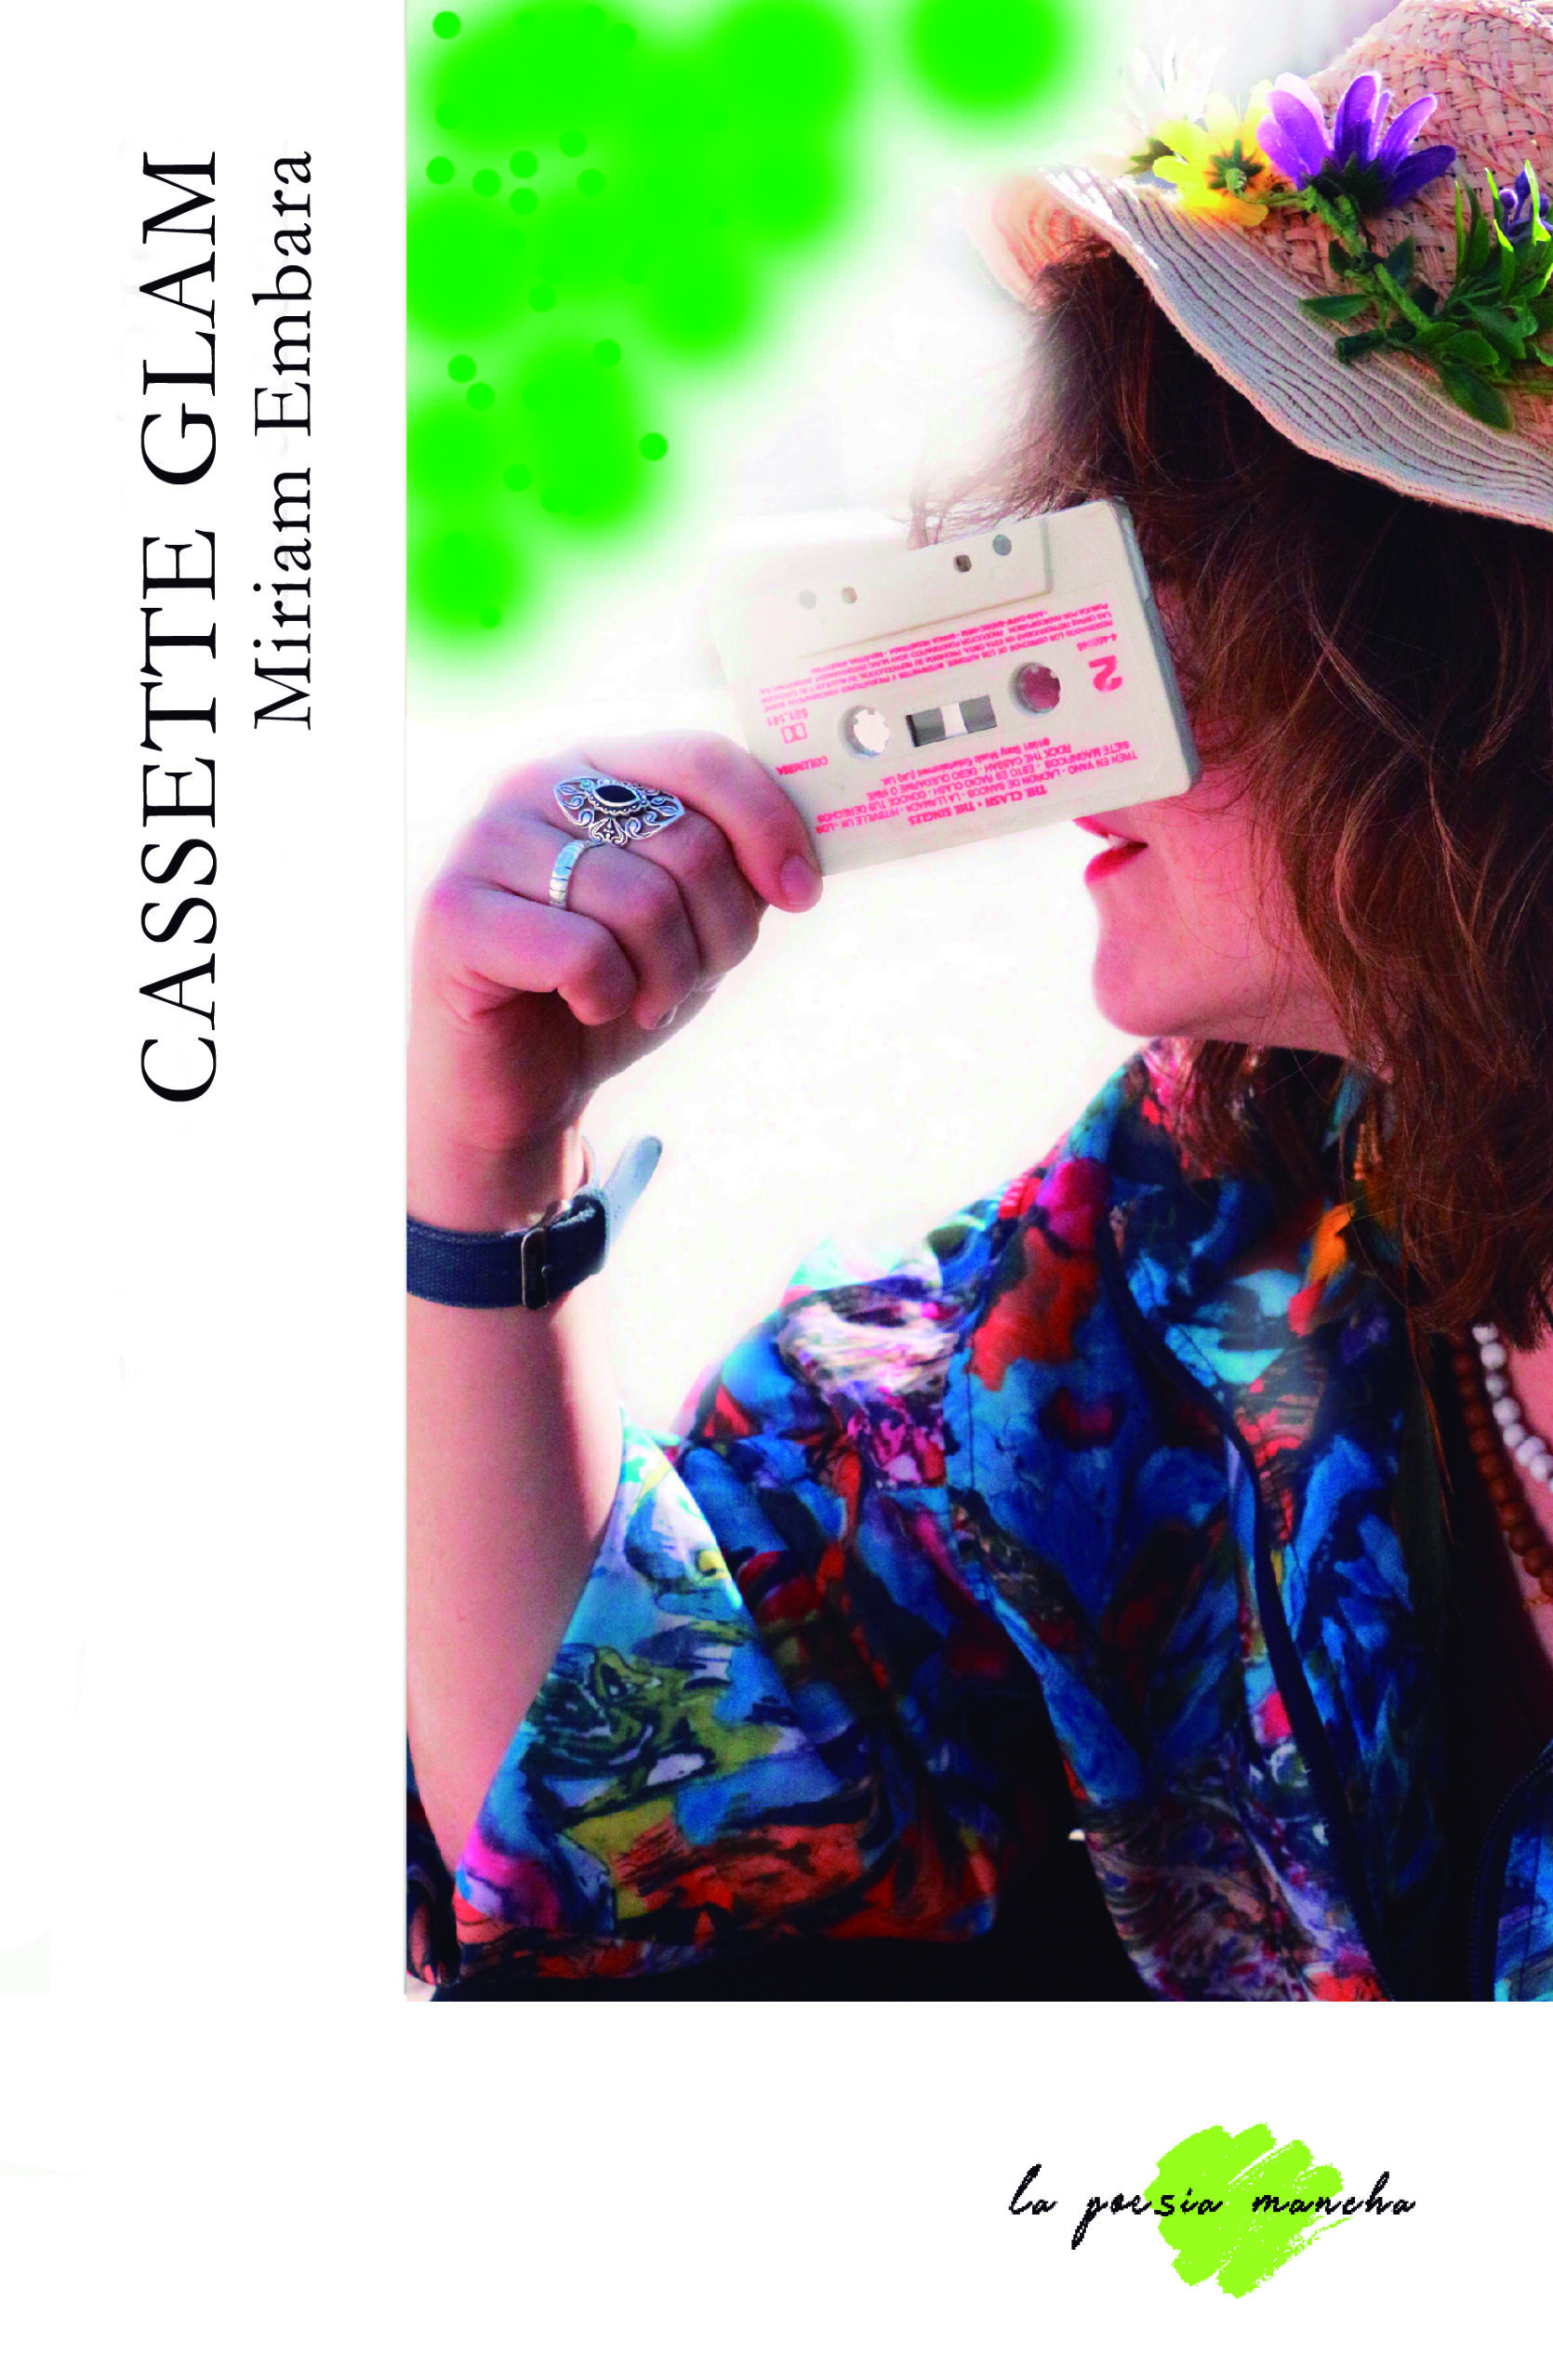 Grupos editoriales españoles. Libro Cassette Glam